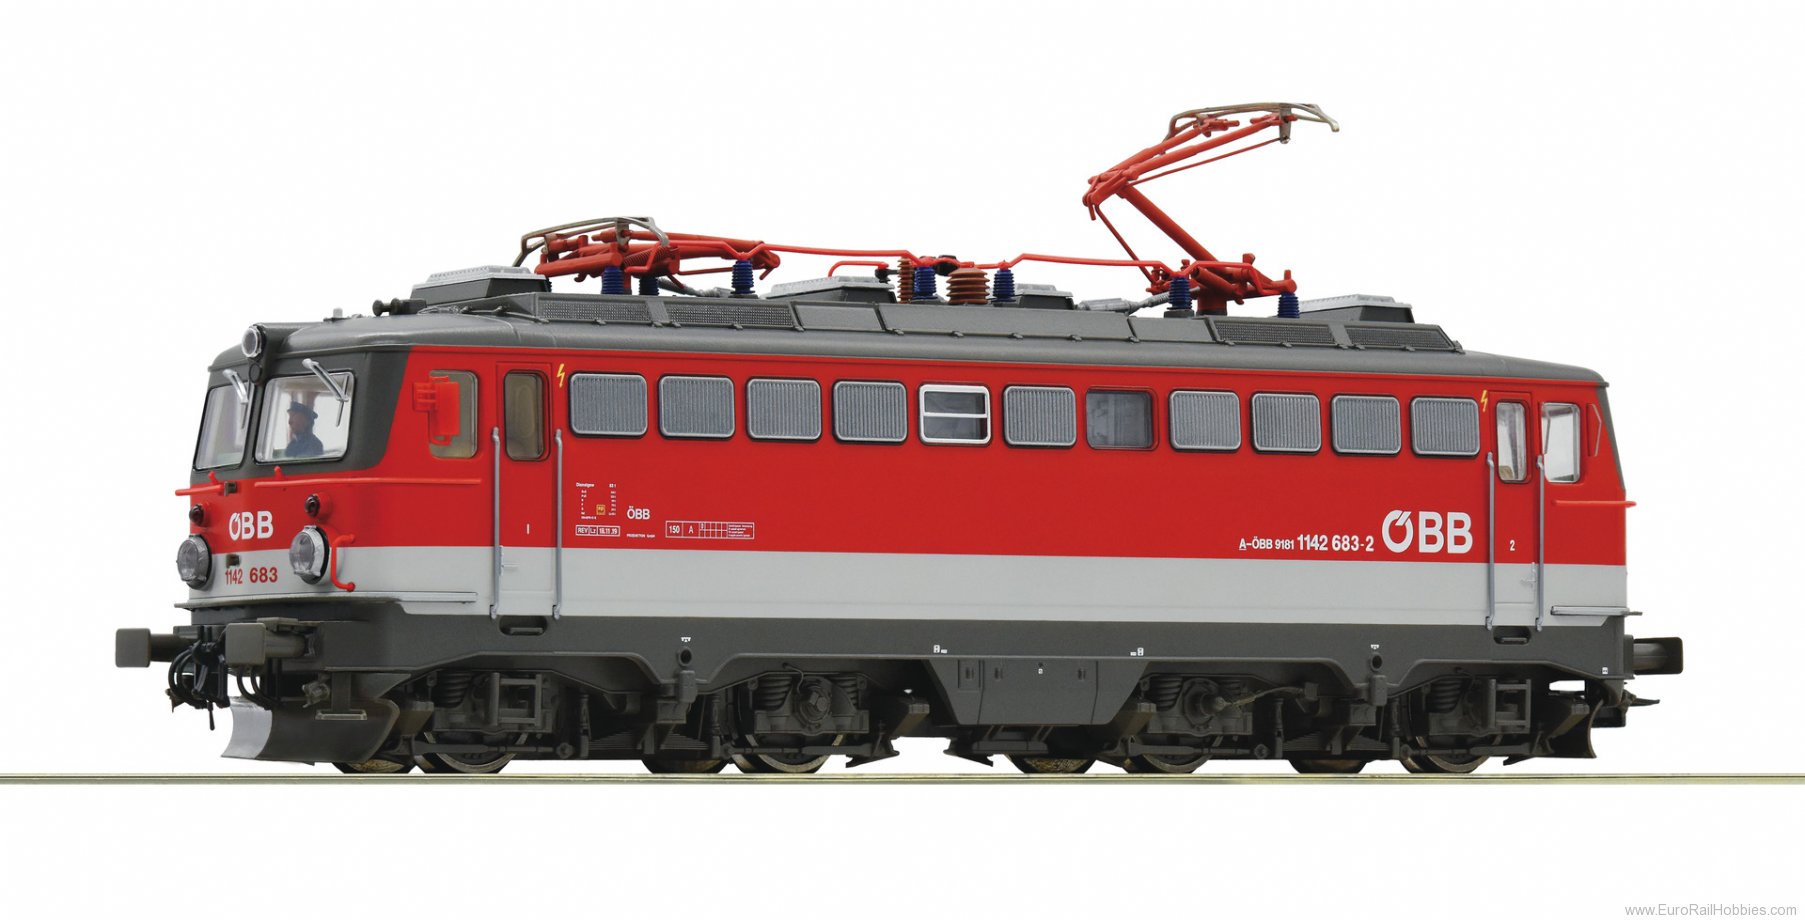 Roco 73611 ÃBB Electric locomotive 1142 683-2 (DCC w/